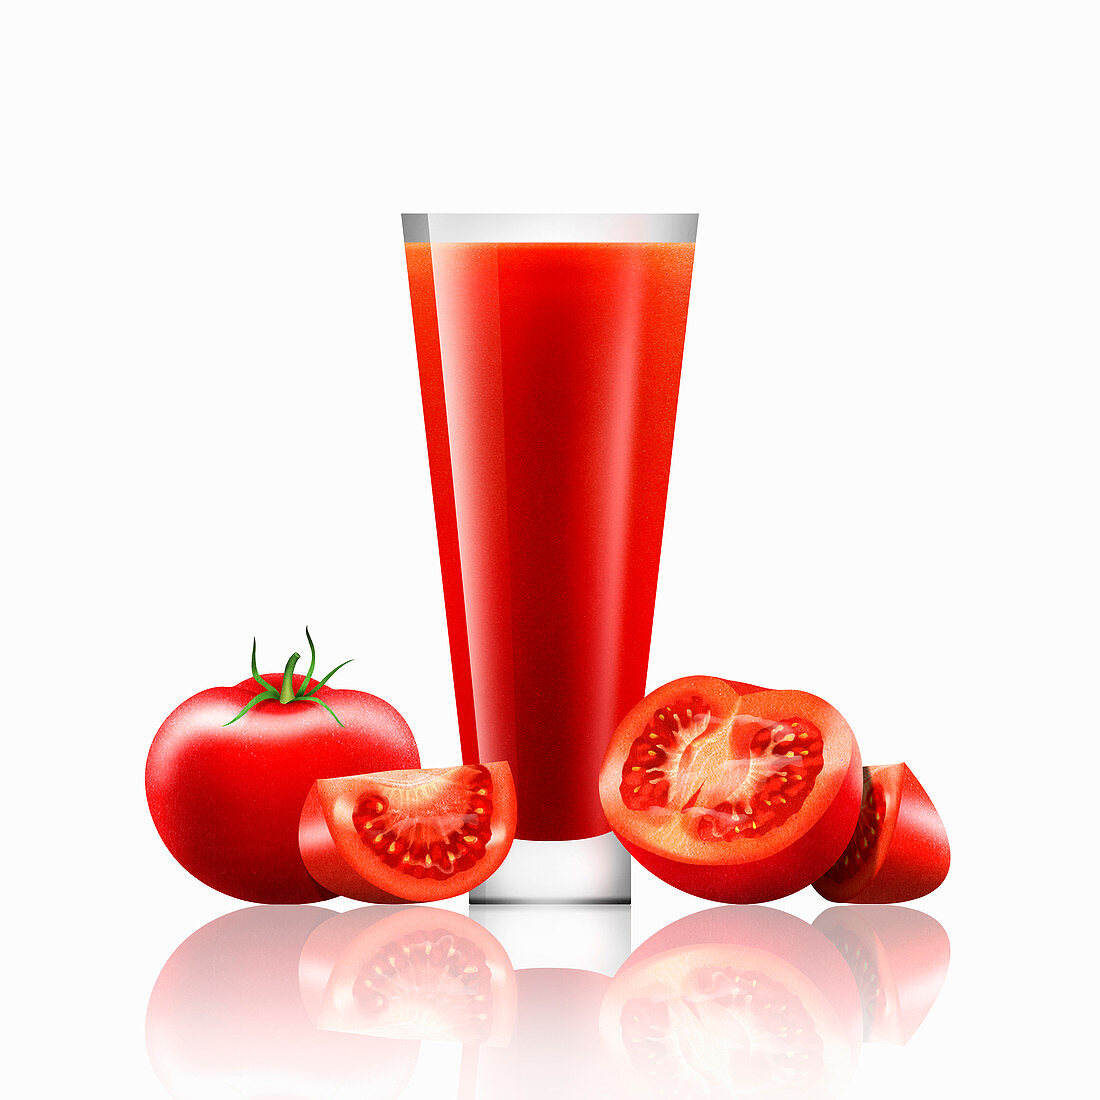 Fresh tomatoes and glass of tomato juice, illustration